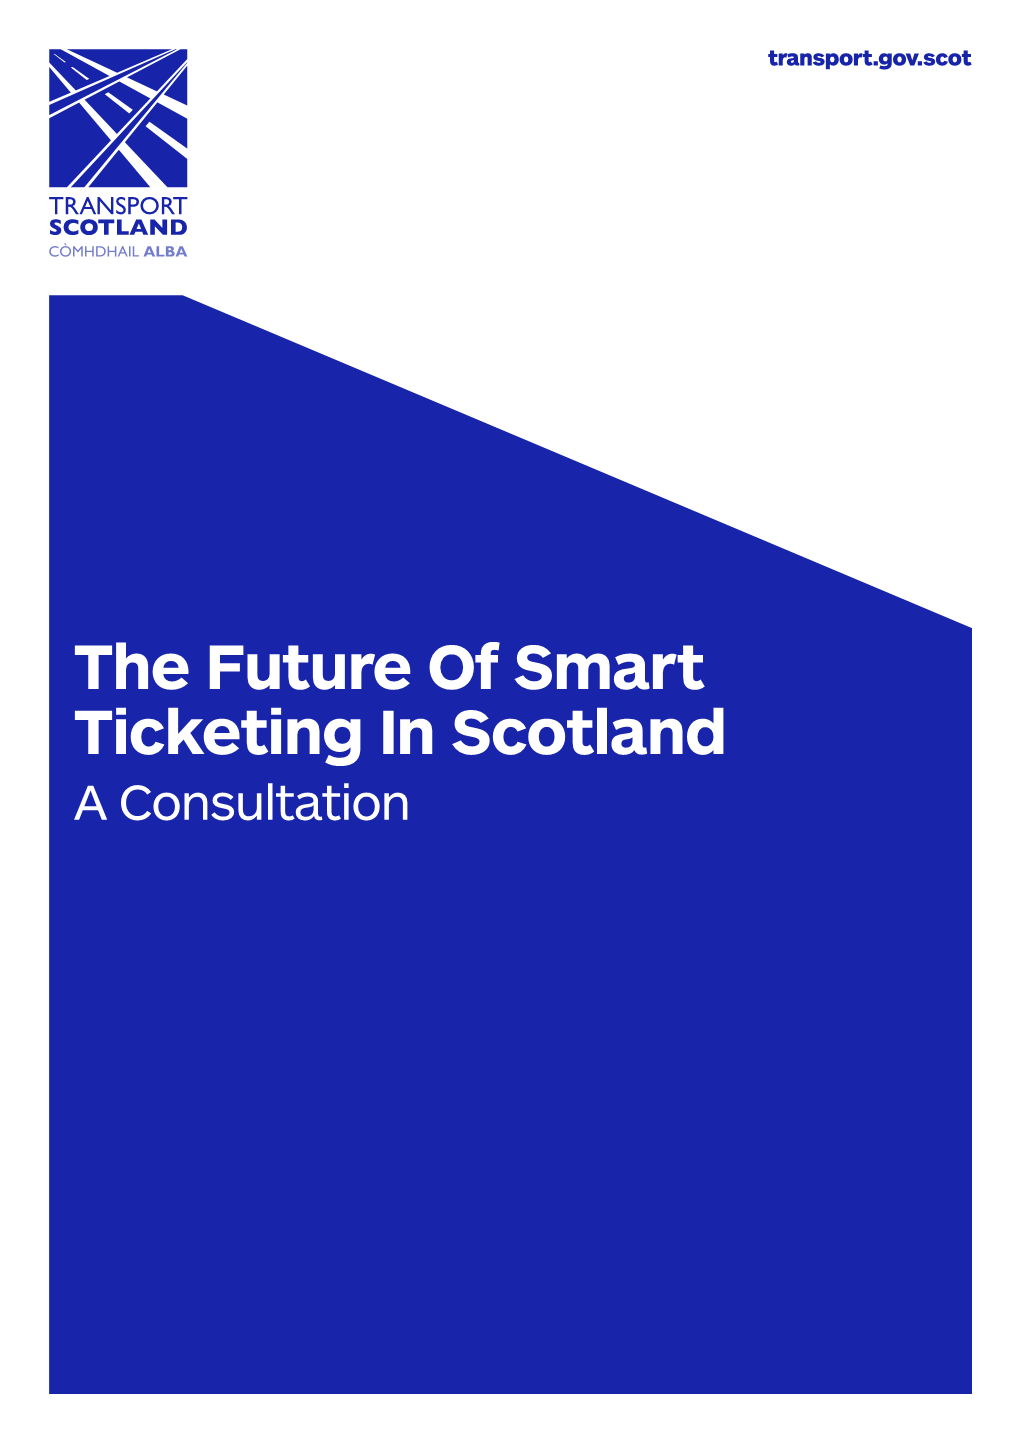 The Future of Smart Ticketing in Scotland a Consultation Consultation on the Future of Smart Ticketing in Scotland Transport Scotland